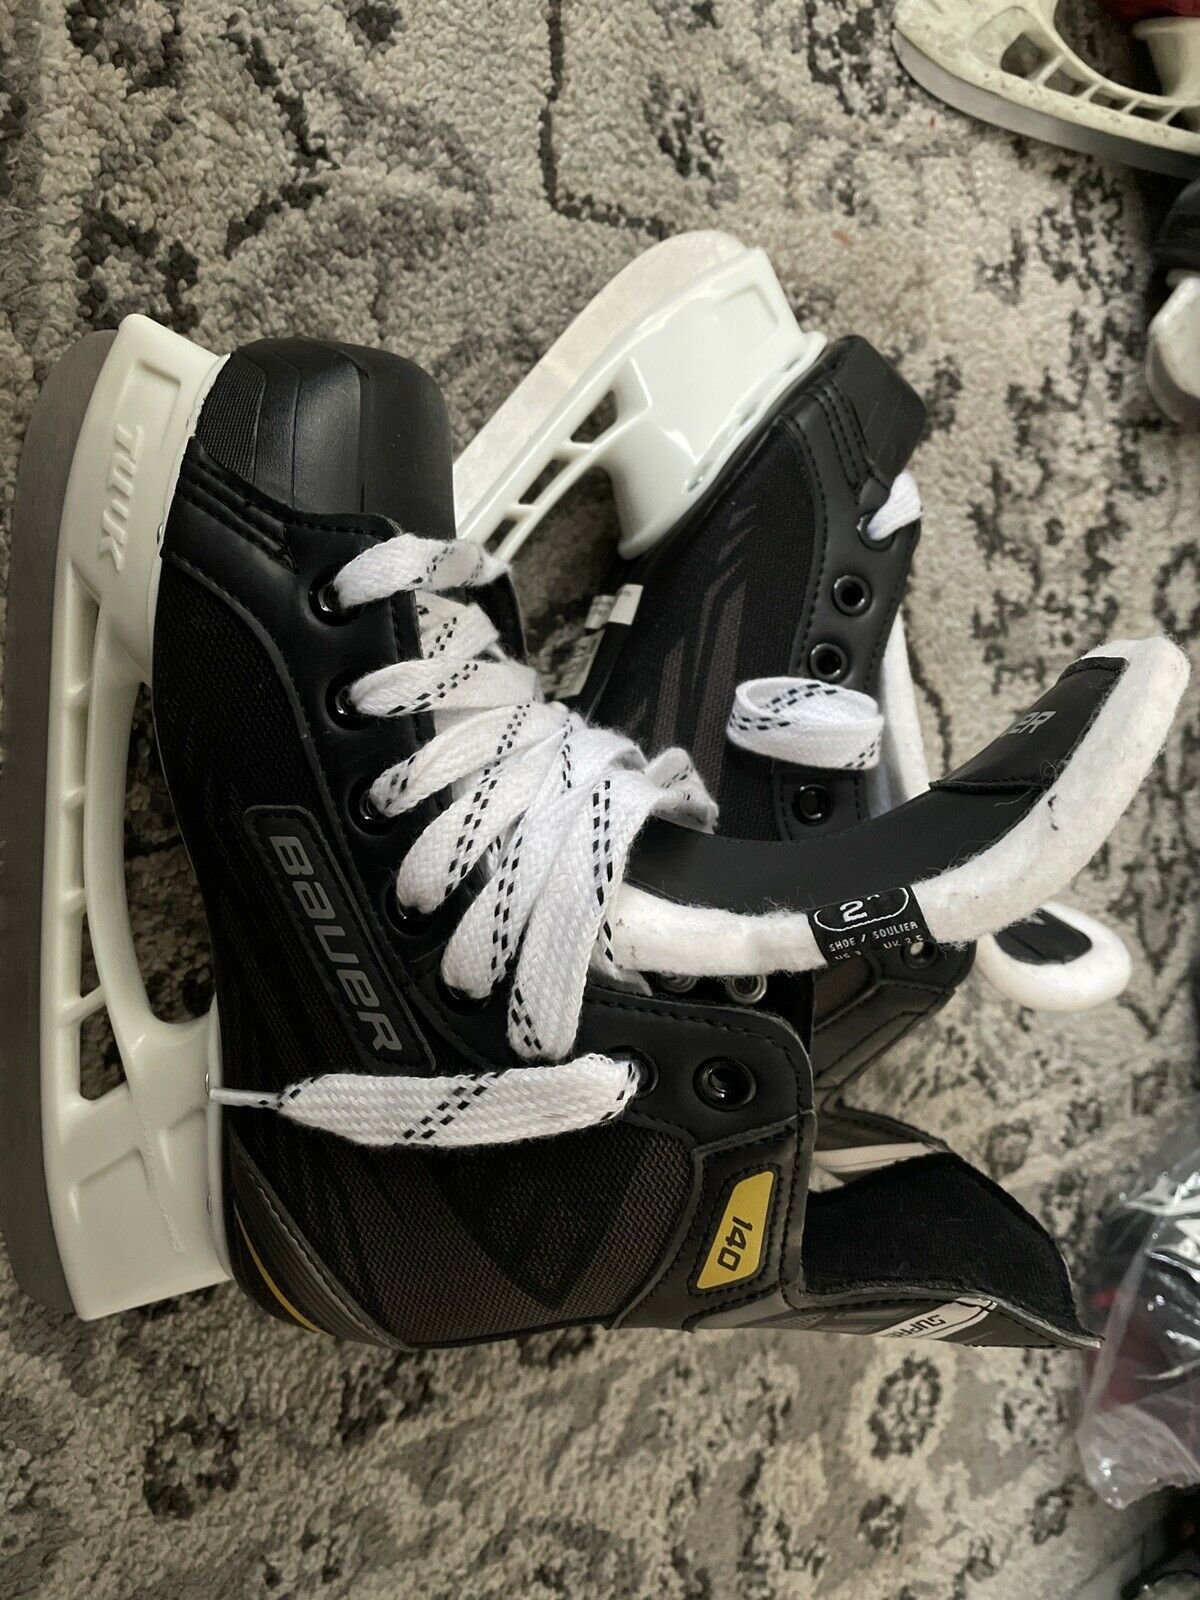 New Bauer Ice Hockey Skates Supreme S140 Size 2